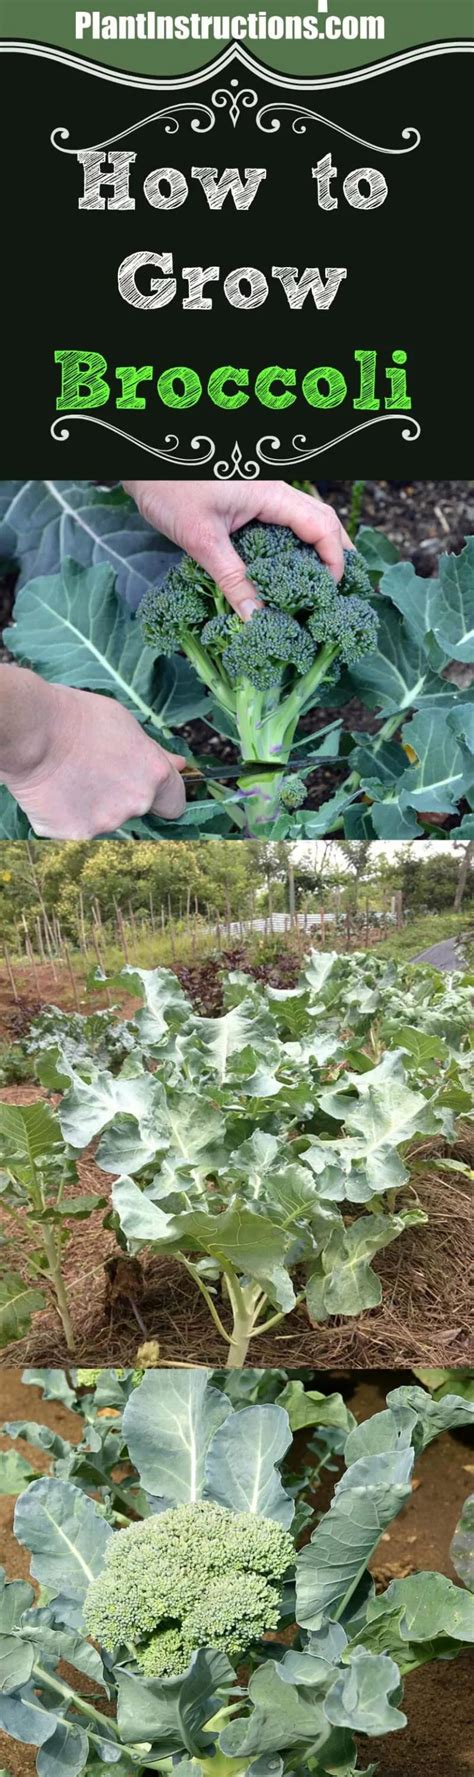 How To Grow Broccoli From Seeds Growing Broccoli Broccoli Plant